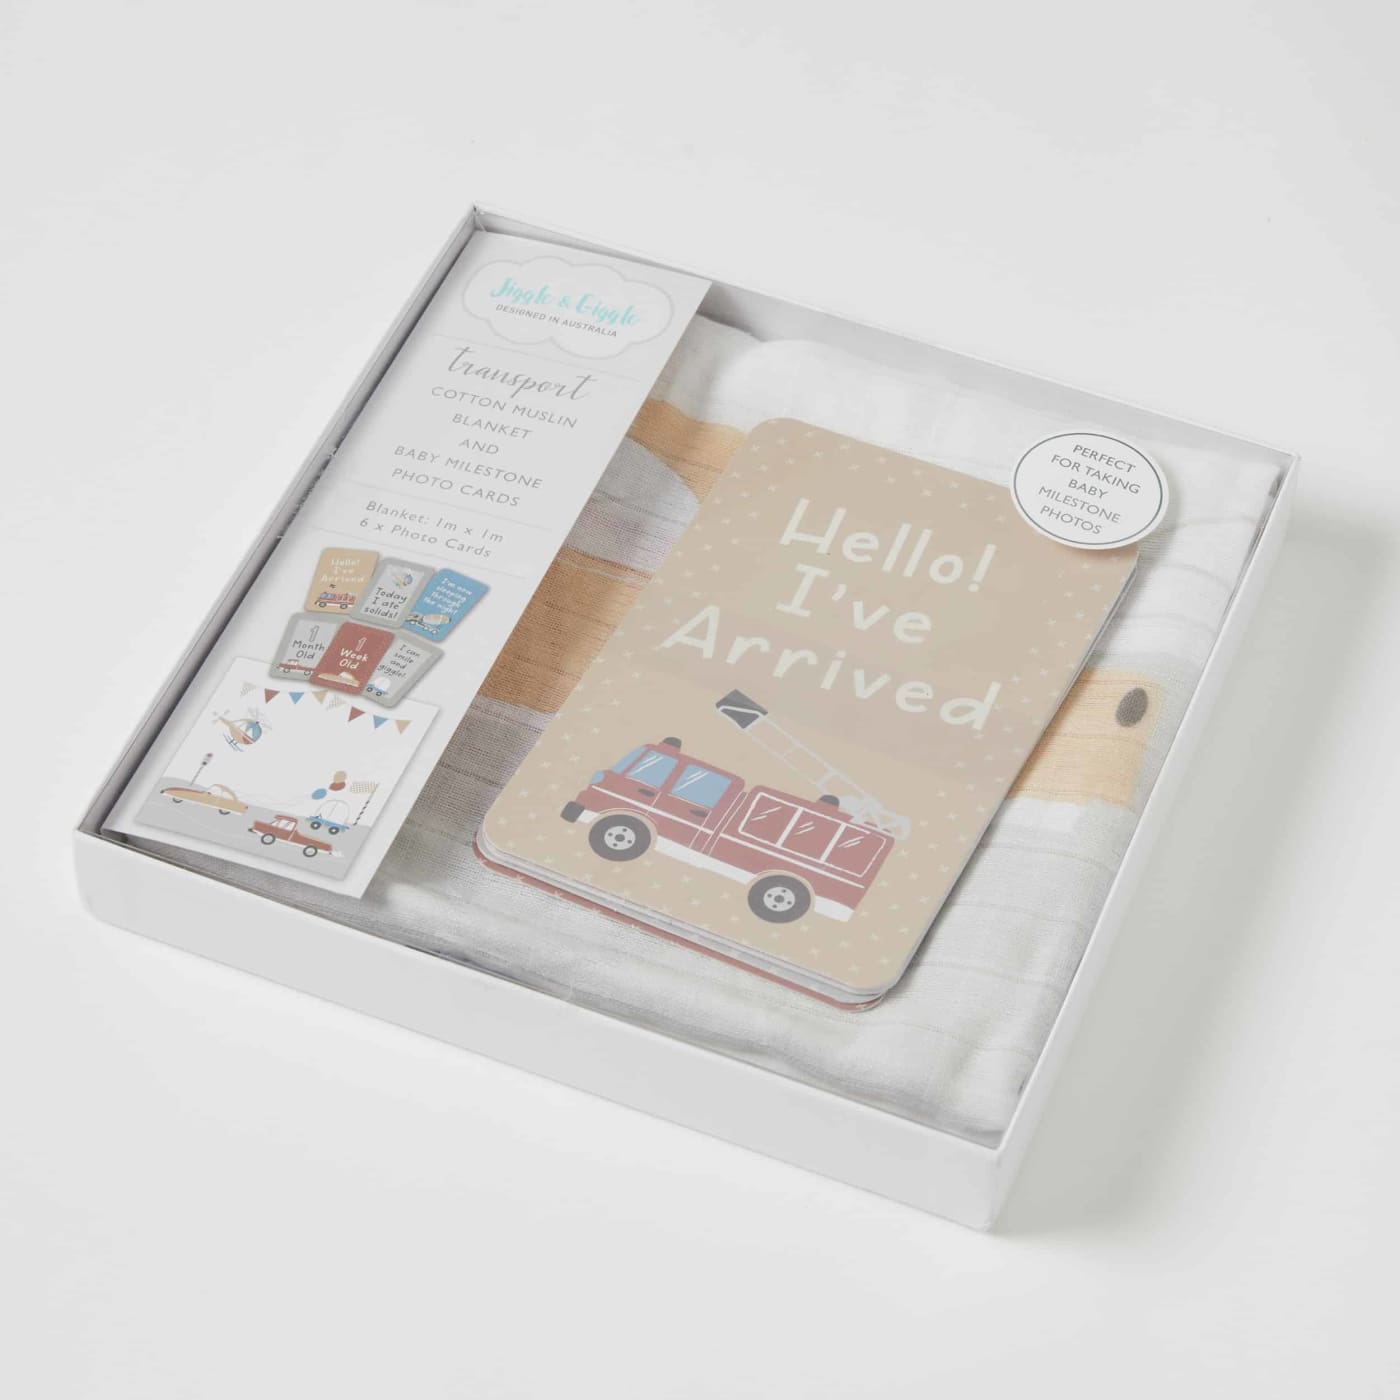 Jiggle & Giggle Cotton Muslin Blanket and Baby Milestone Photo Cards Set - Transport - Transport - NURSERY & BEDTIME - SWADDLES/WRAPS